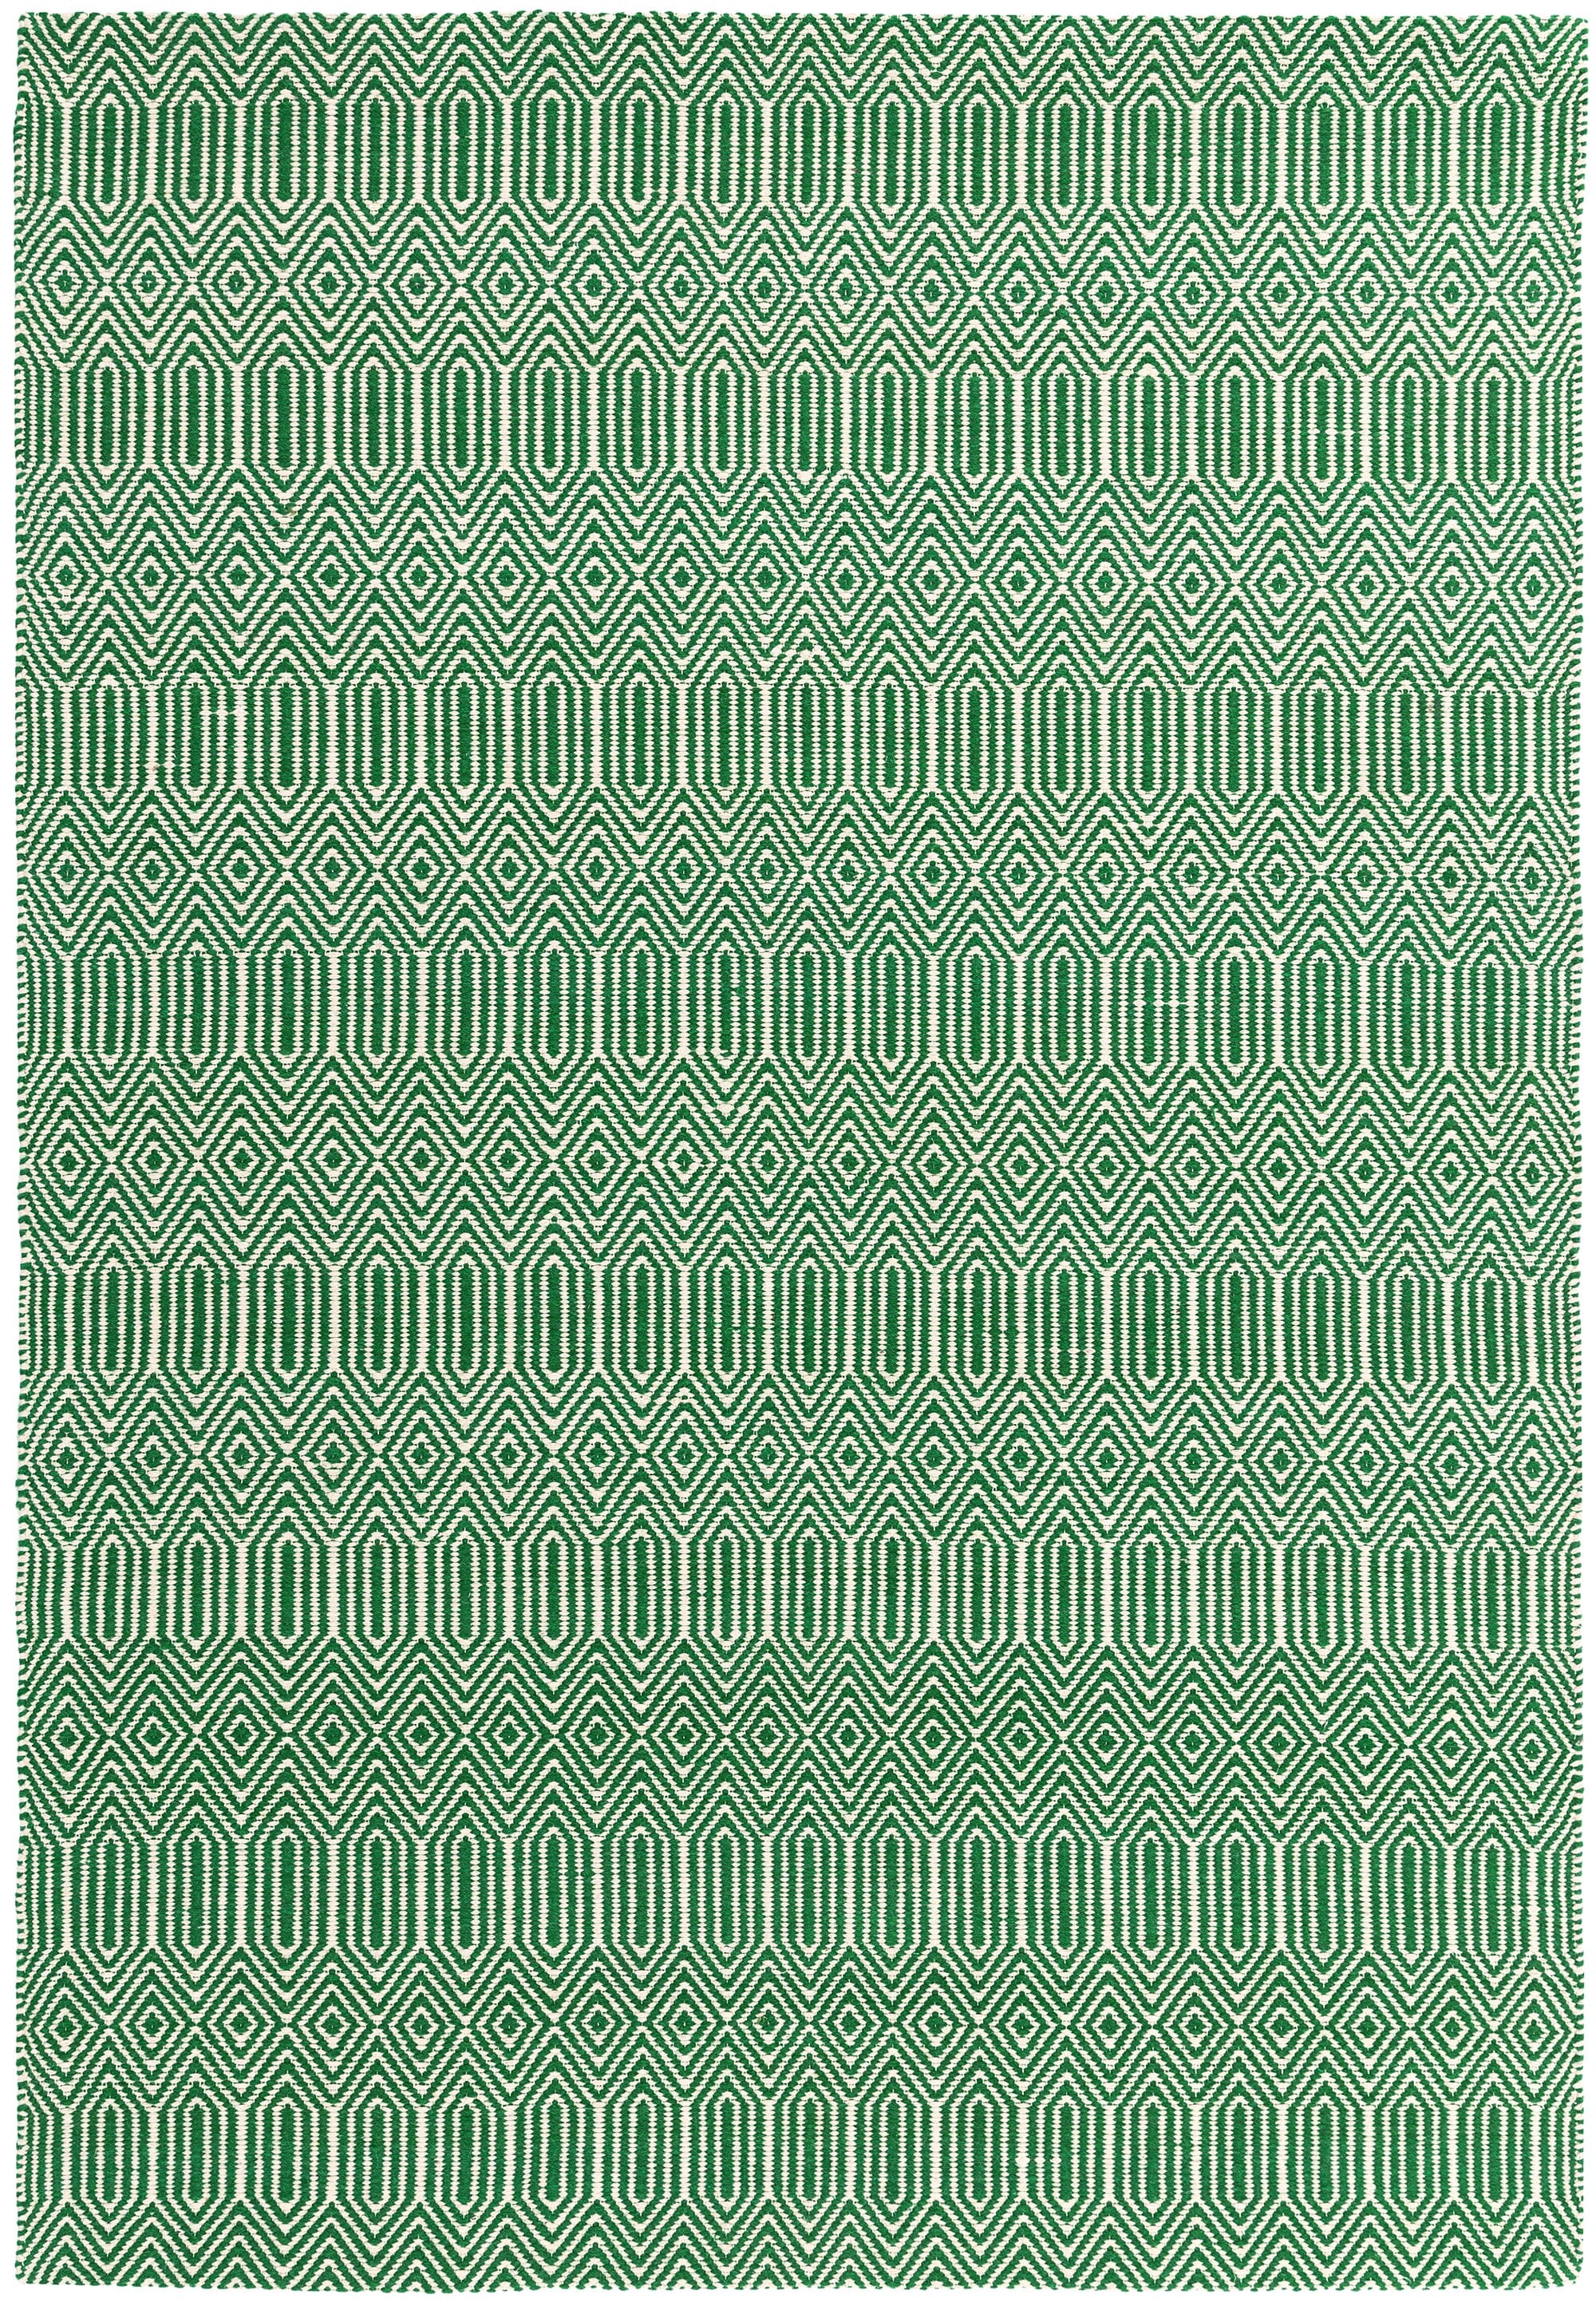 Asiatic Carpets Sloan Hand Woven Runner Green - 66 x 200cm